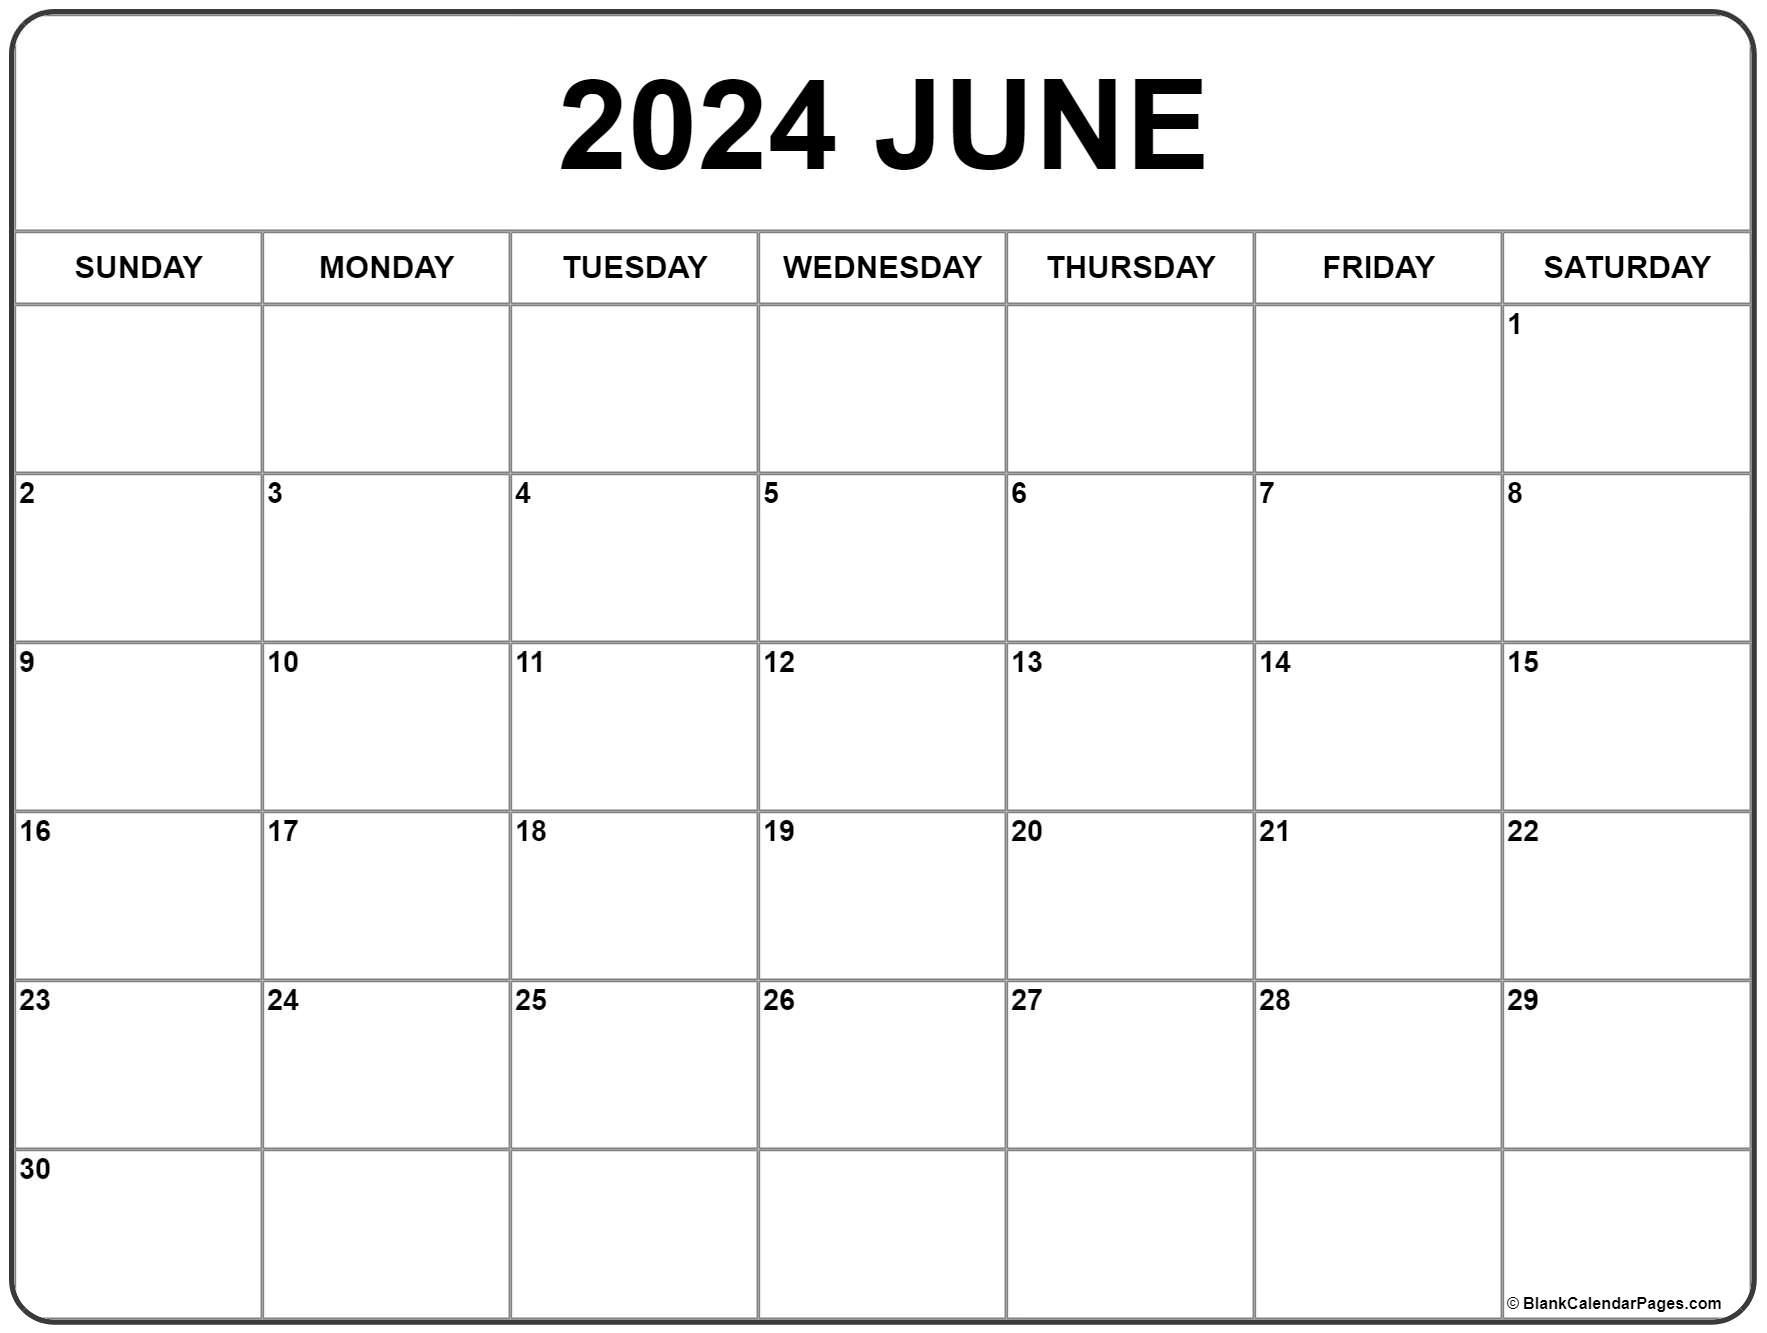 June 2024 Calendar | Free Printable Calendar with 2024 June Month Calendar